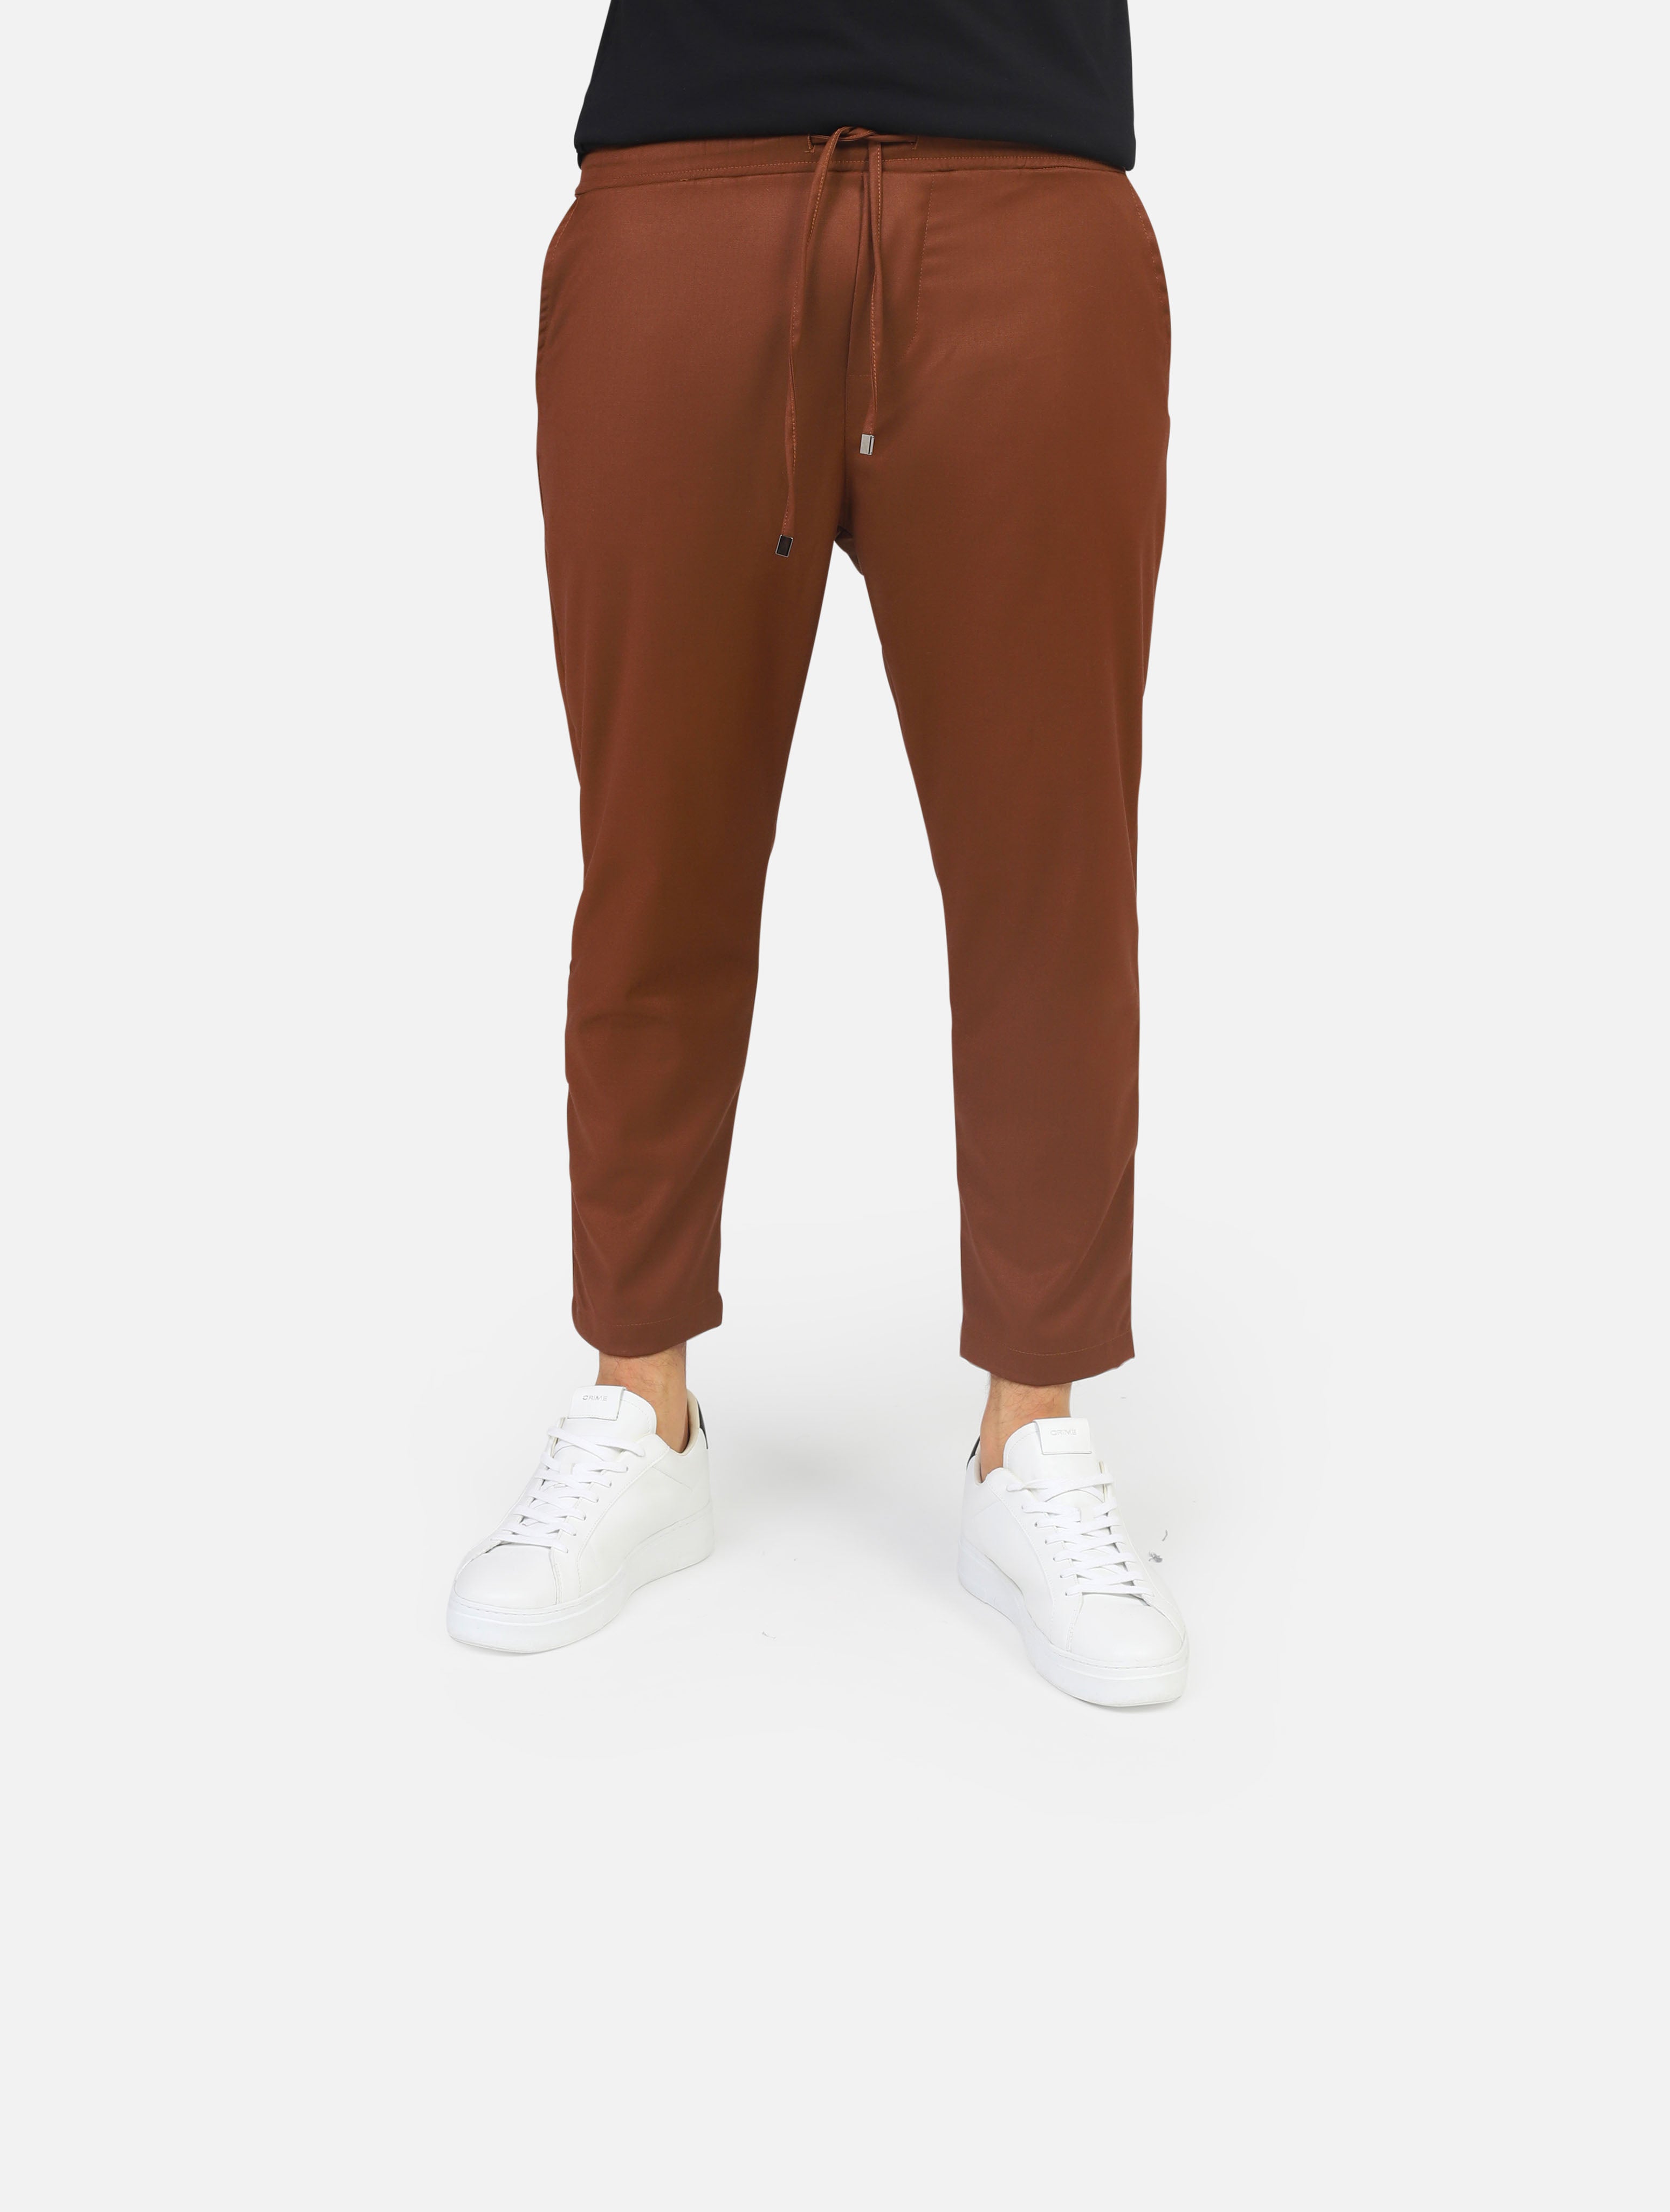 Pantalone why not brand -  marrone uomo  - 1